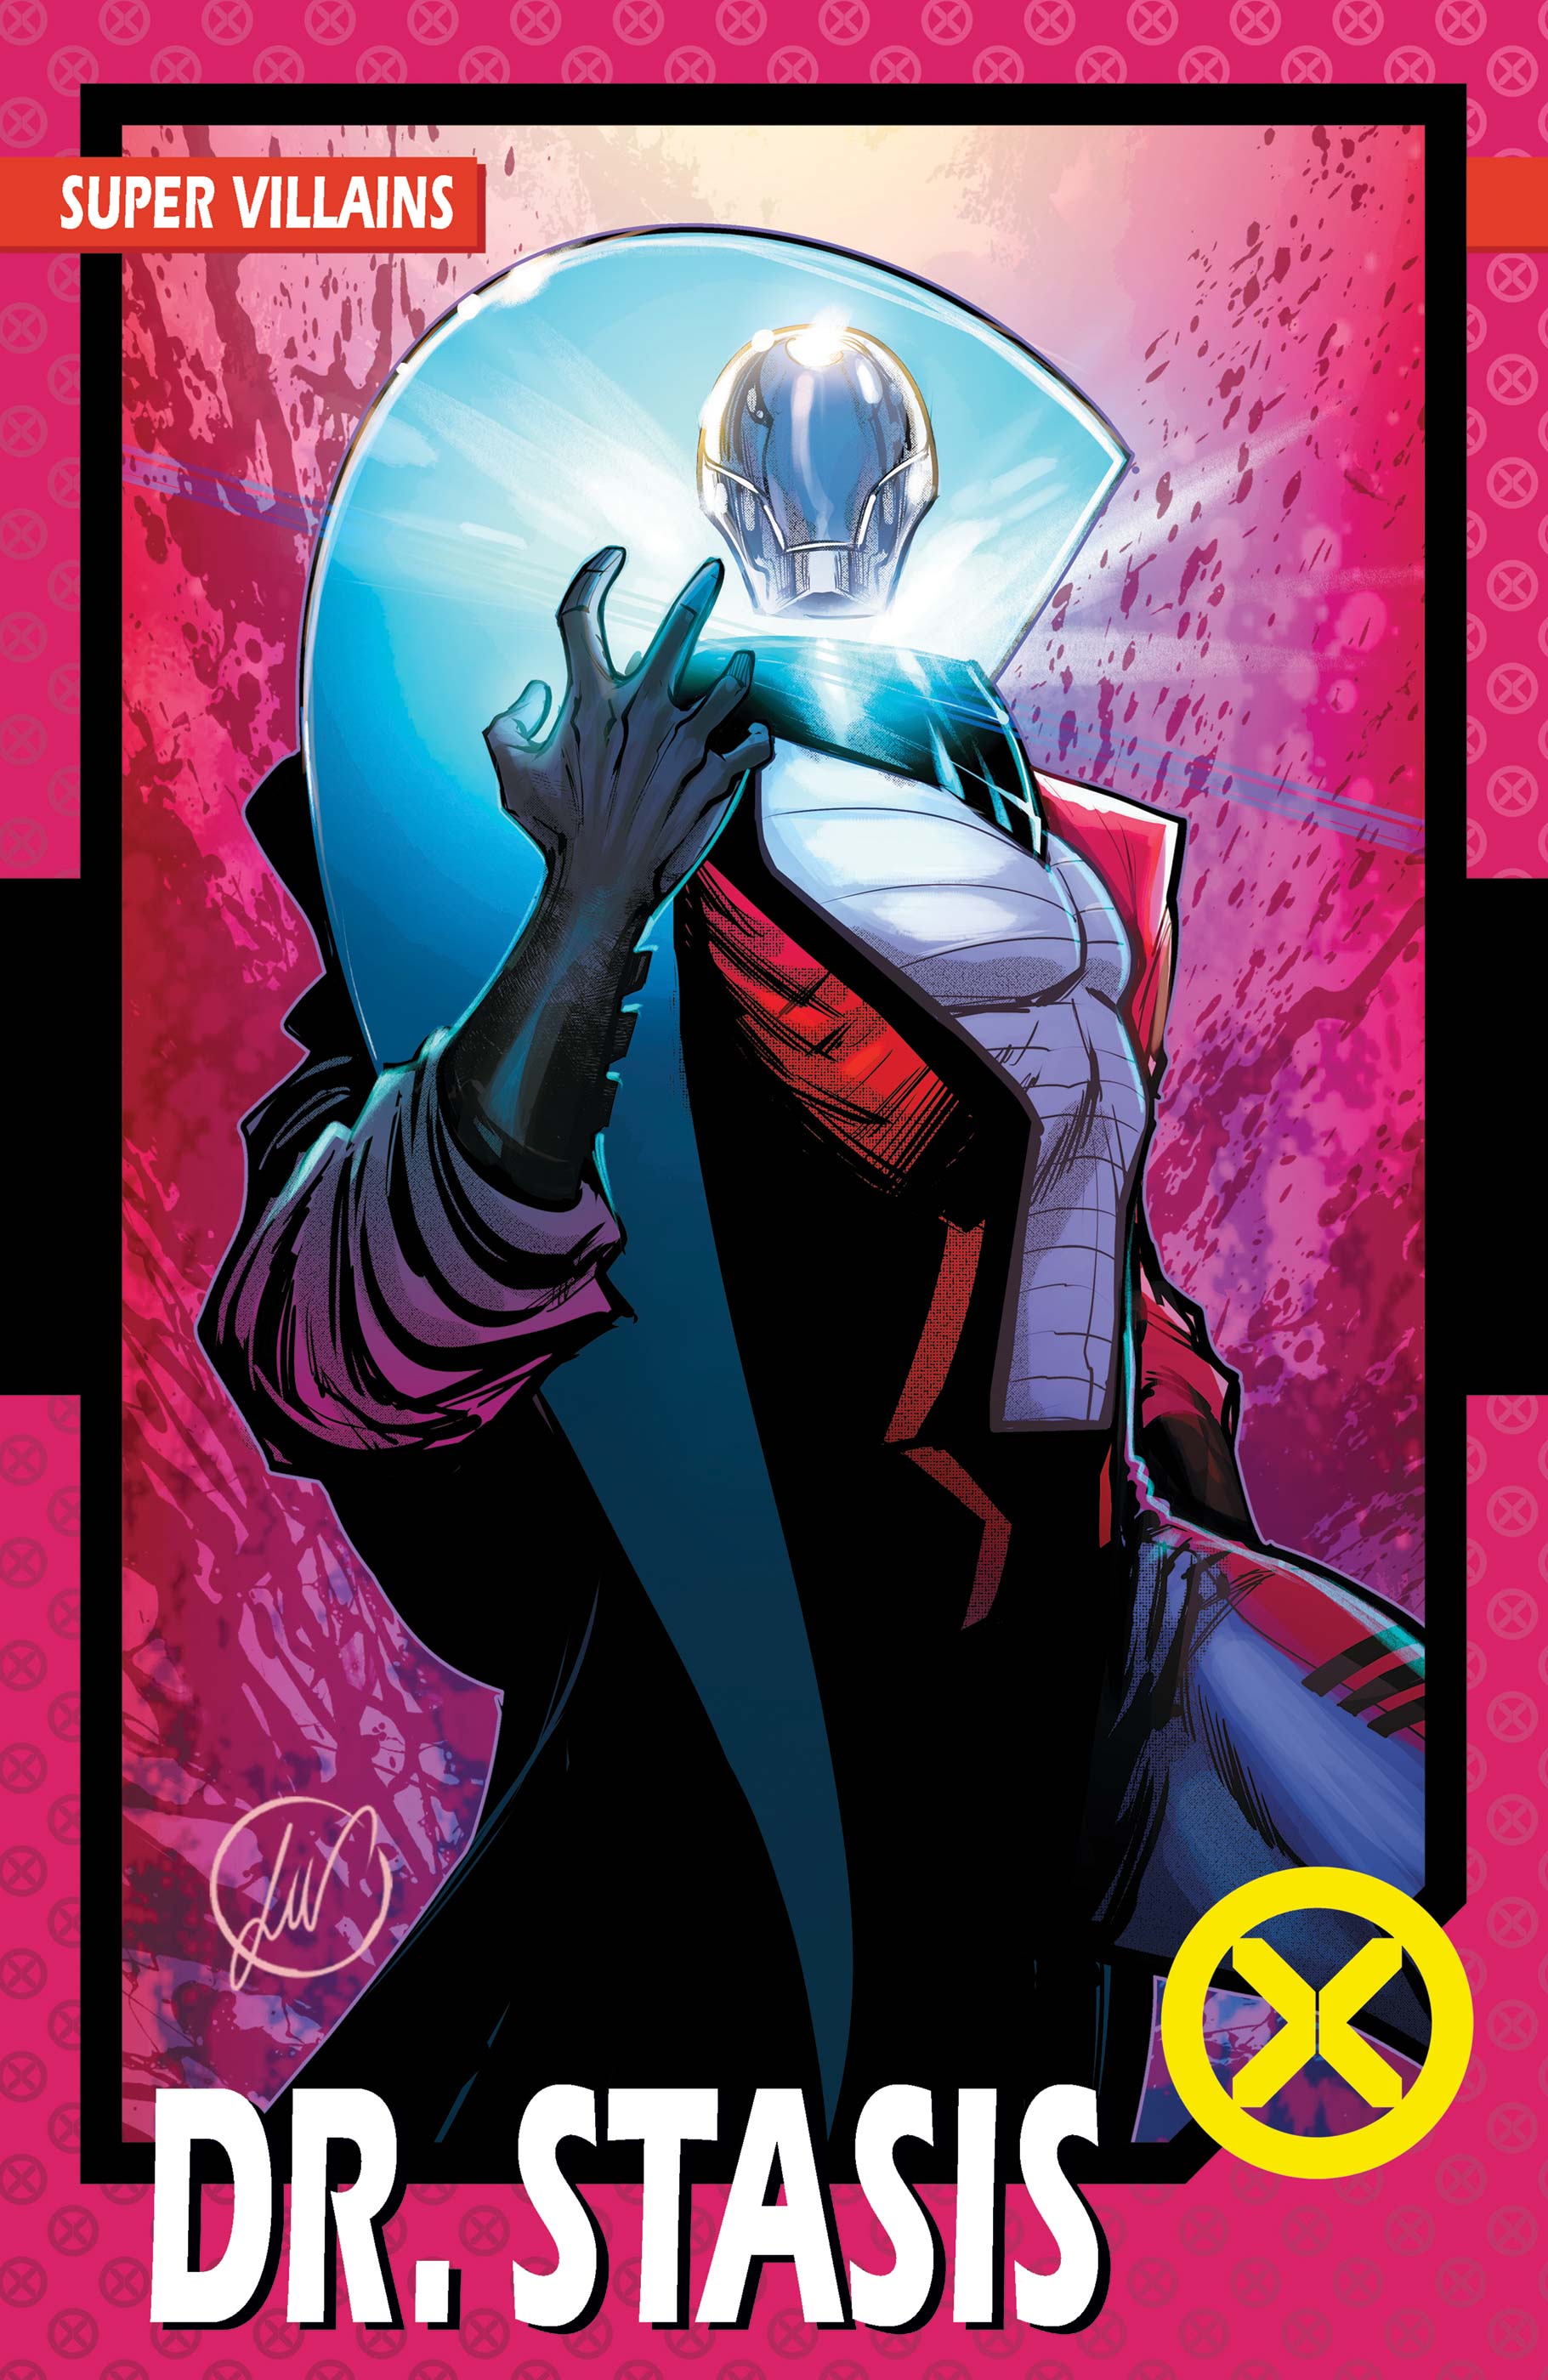 X-Men (2021) #10 (Variant)